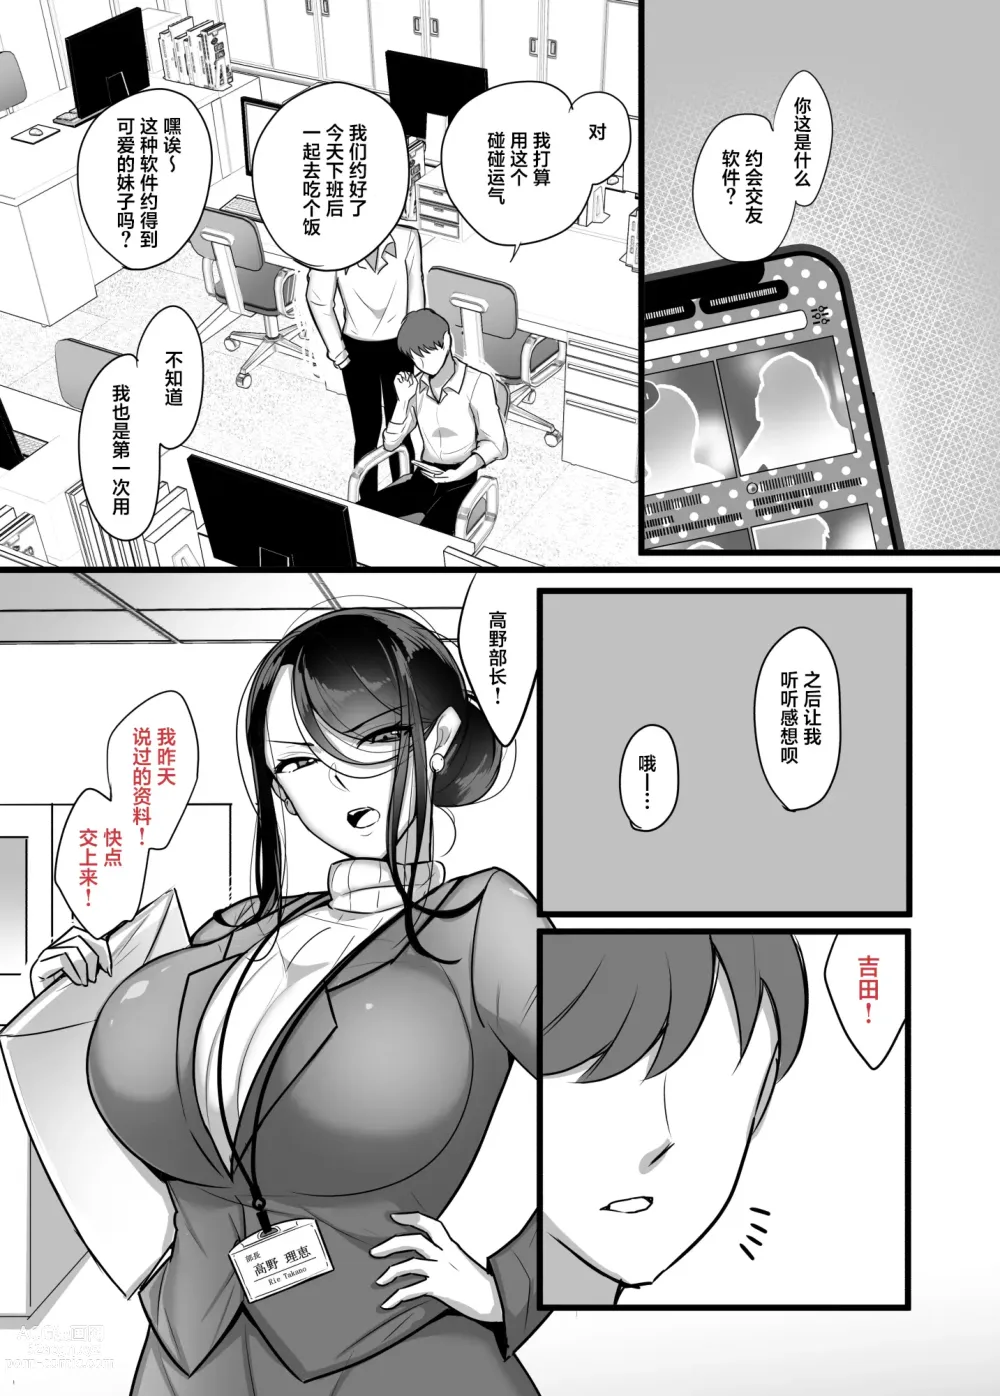 Page 5 of doujinshi 没想到那个魔鬼上司居然会成为我的炮友...